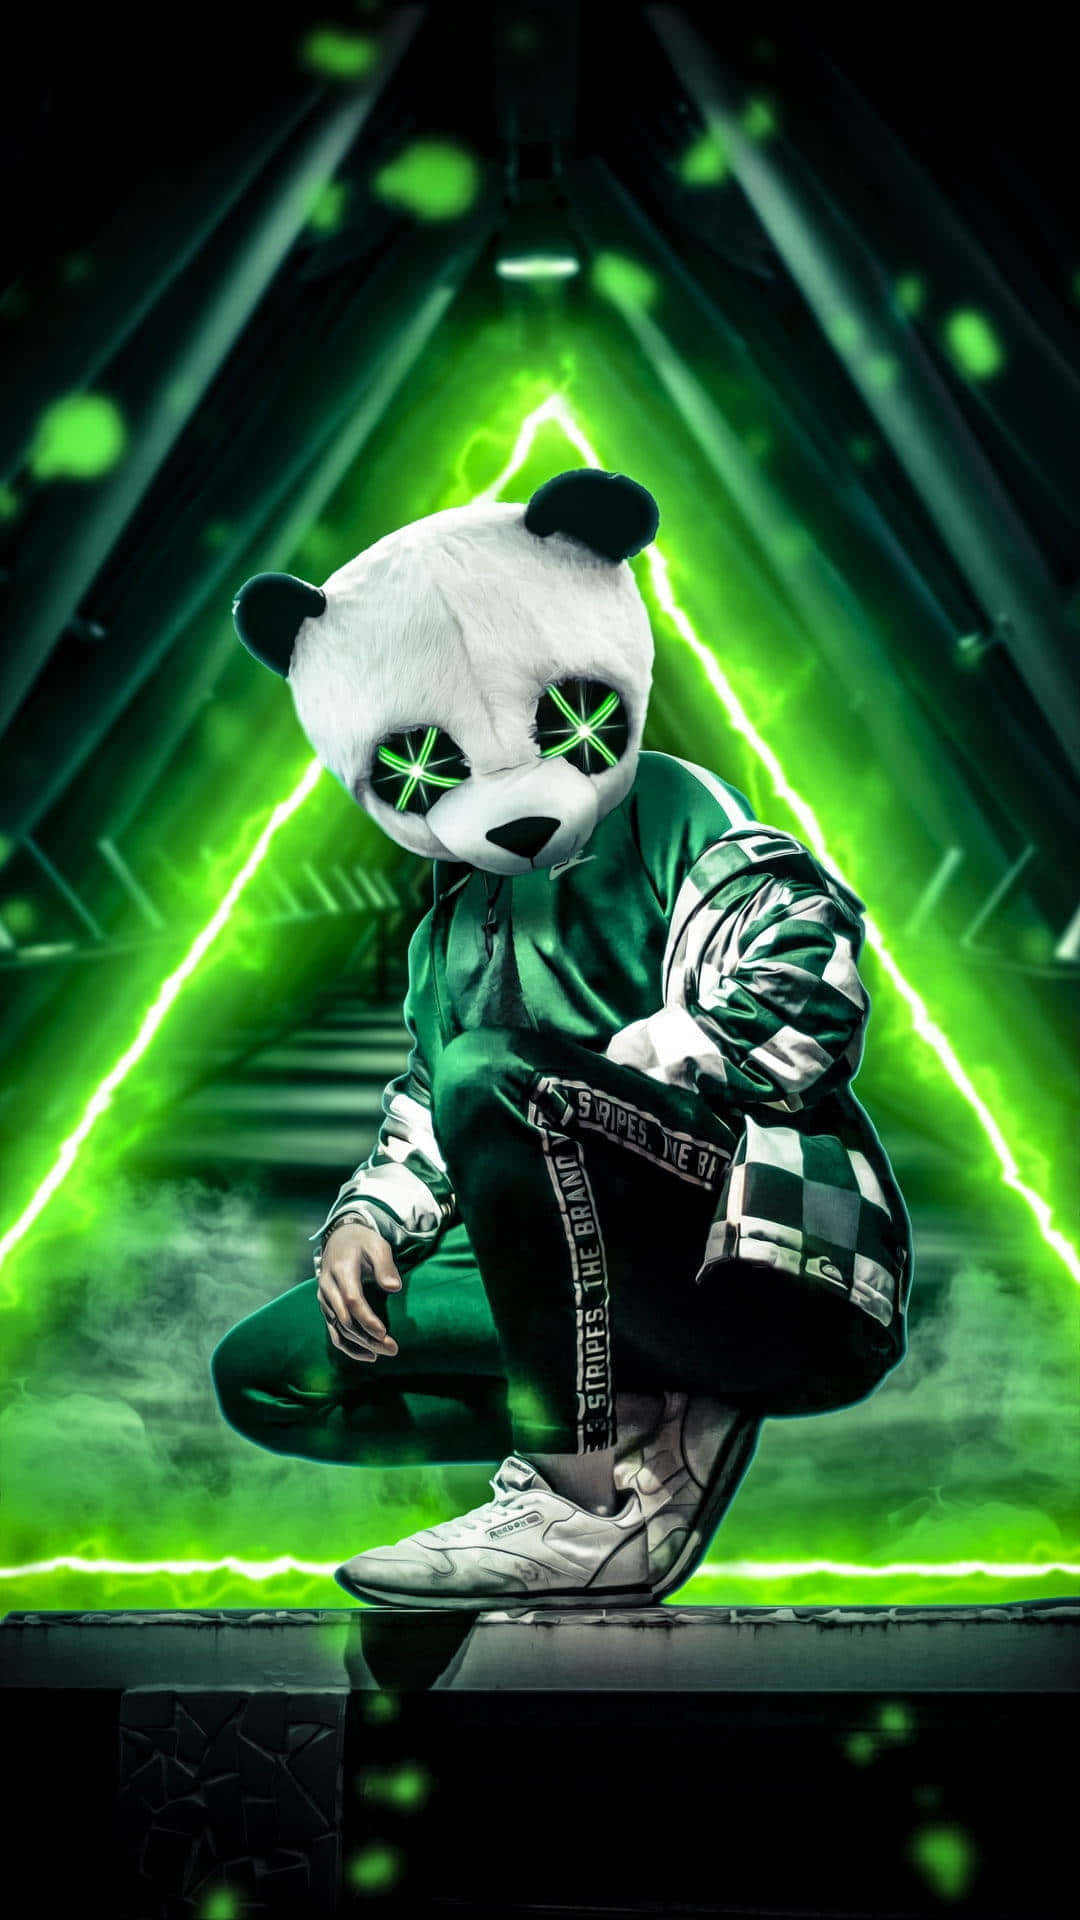 Panda Head Mask Futuristic Backdrop Wallpaper